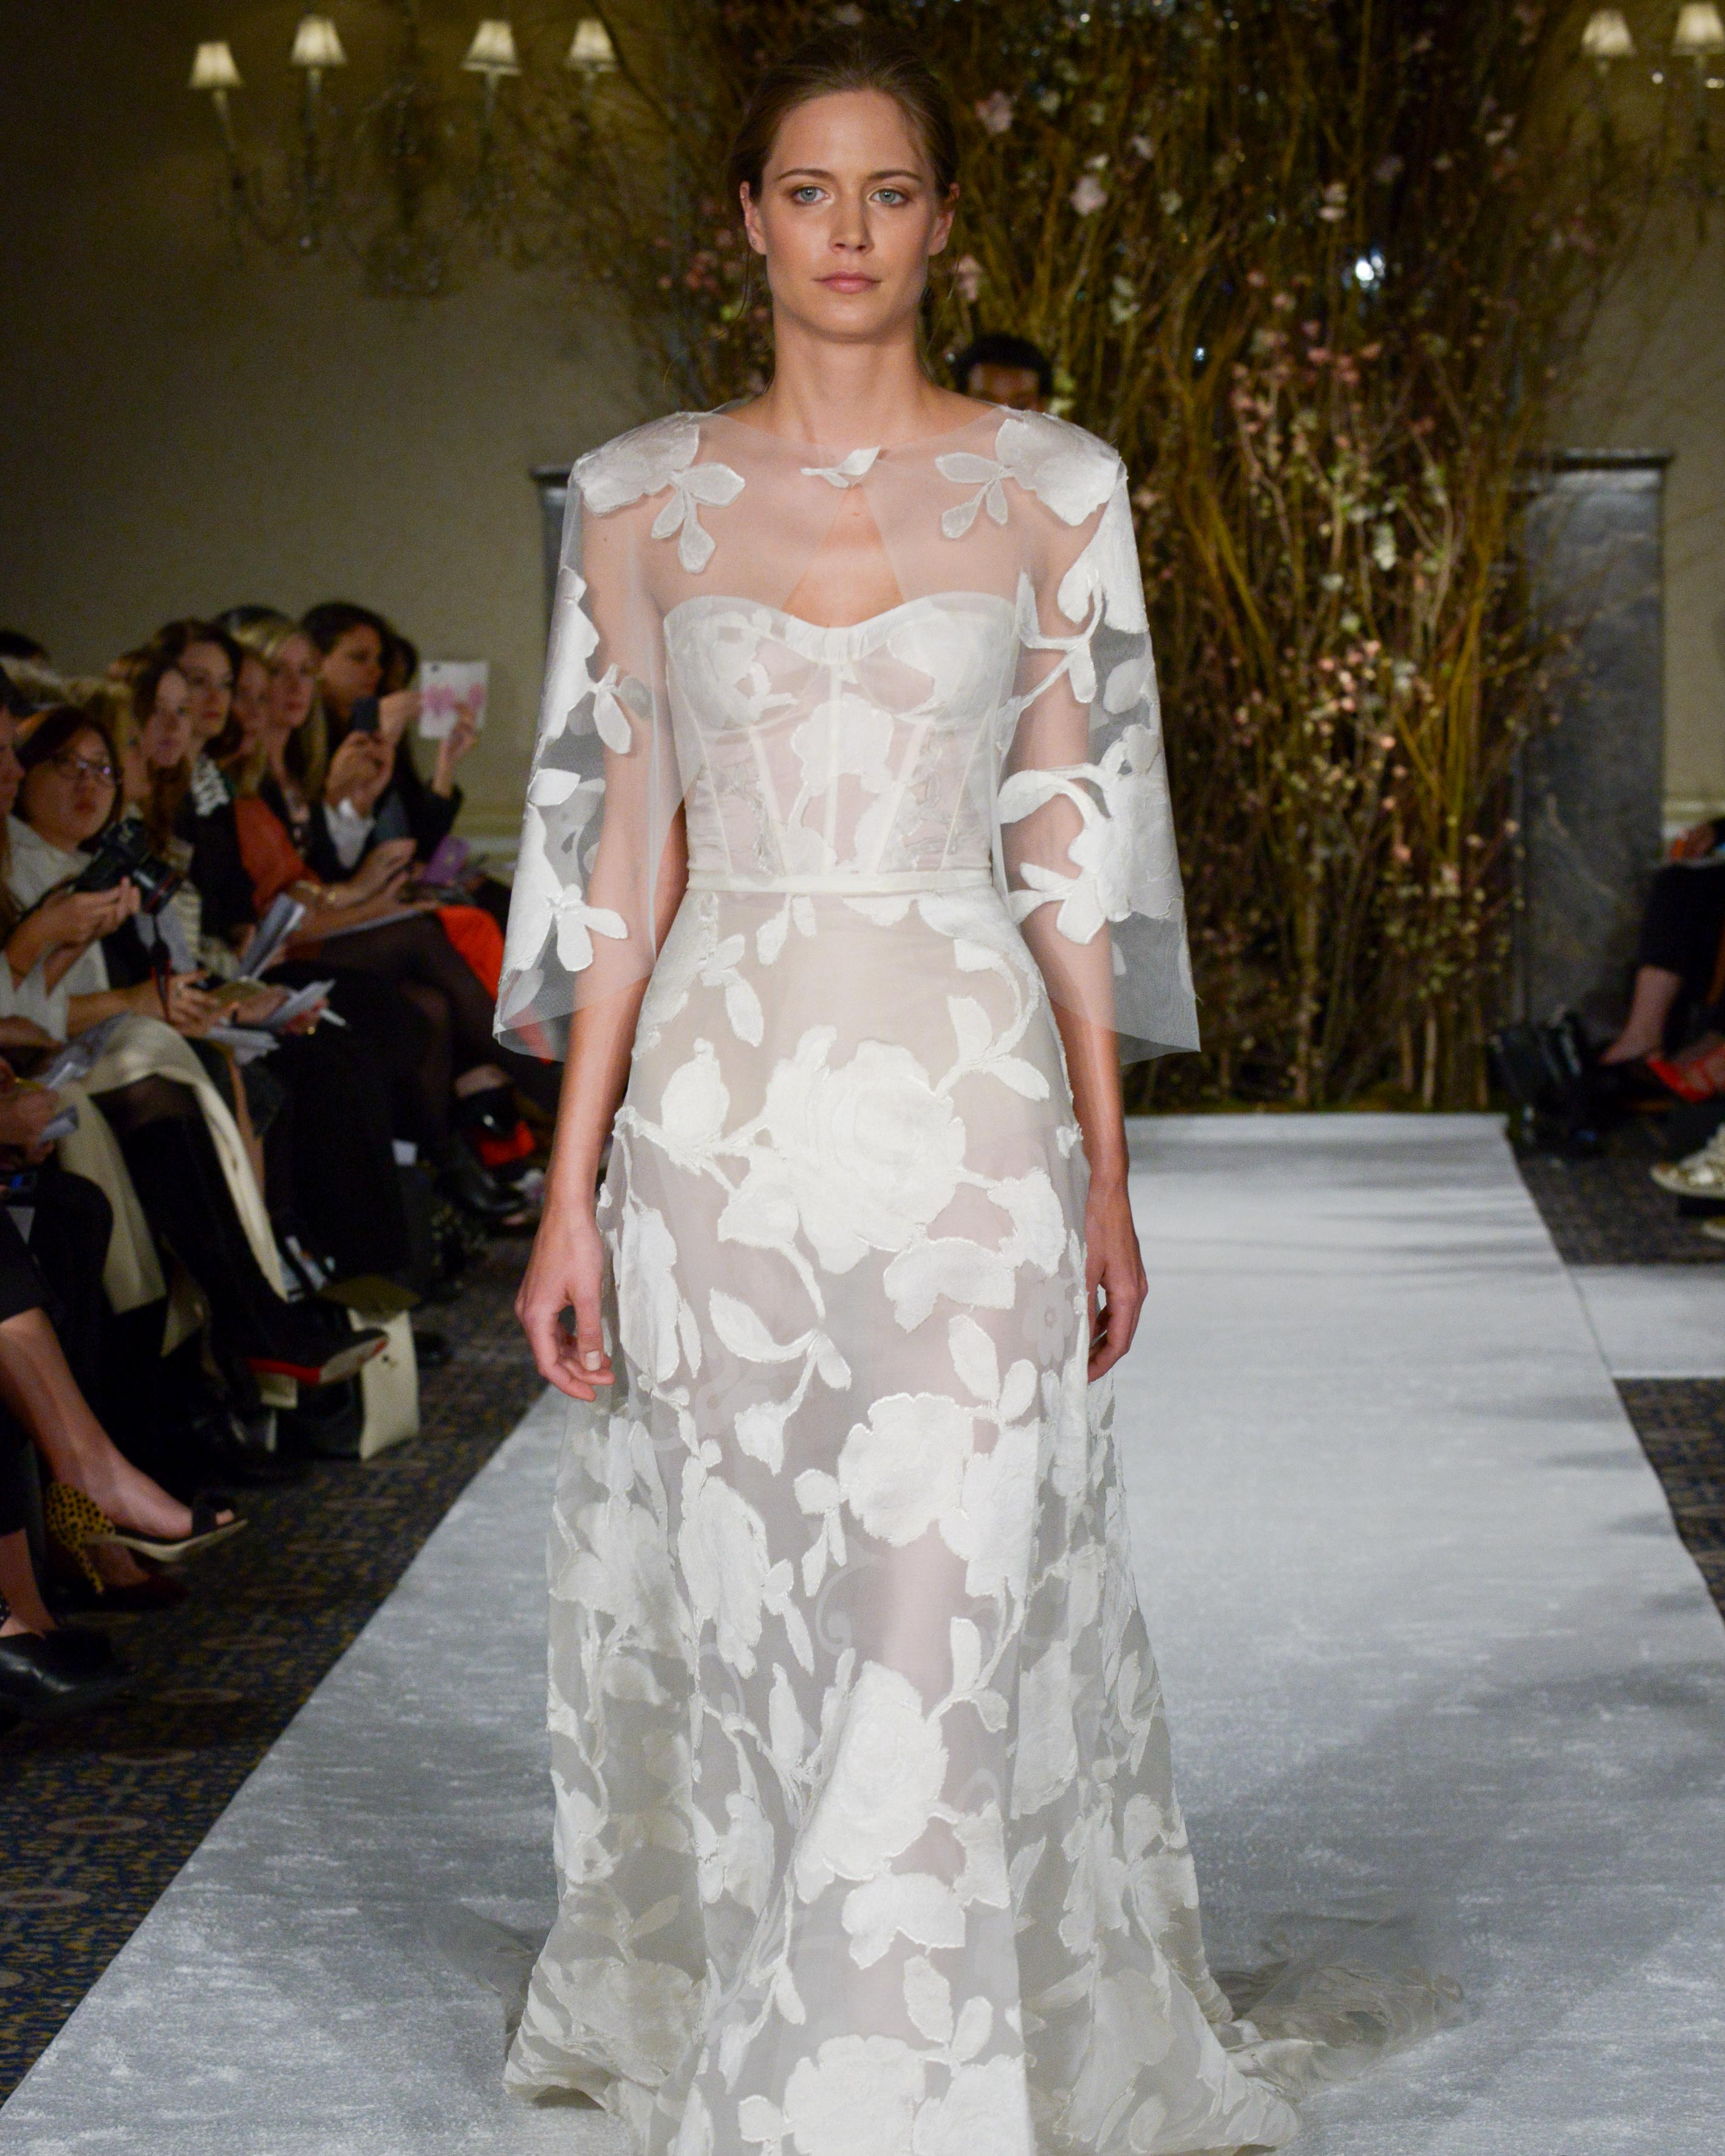 The 9 Best Wedding Dress Trends from Bridal Fashion Week | Martha ...